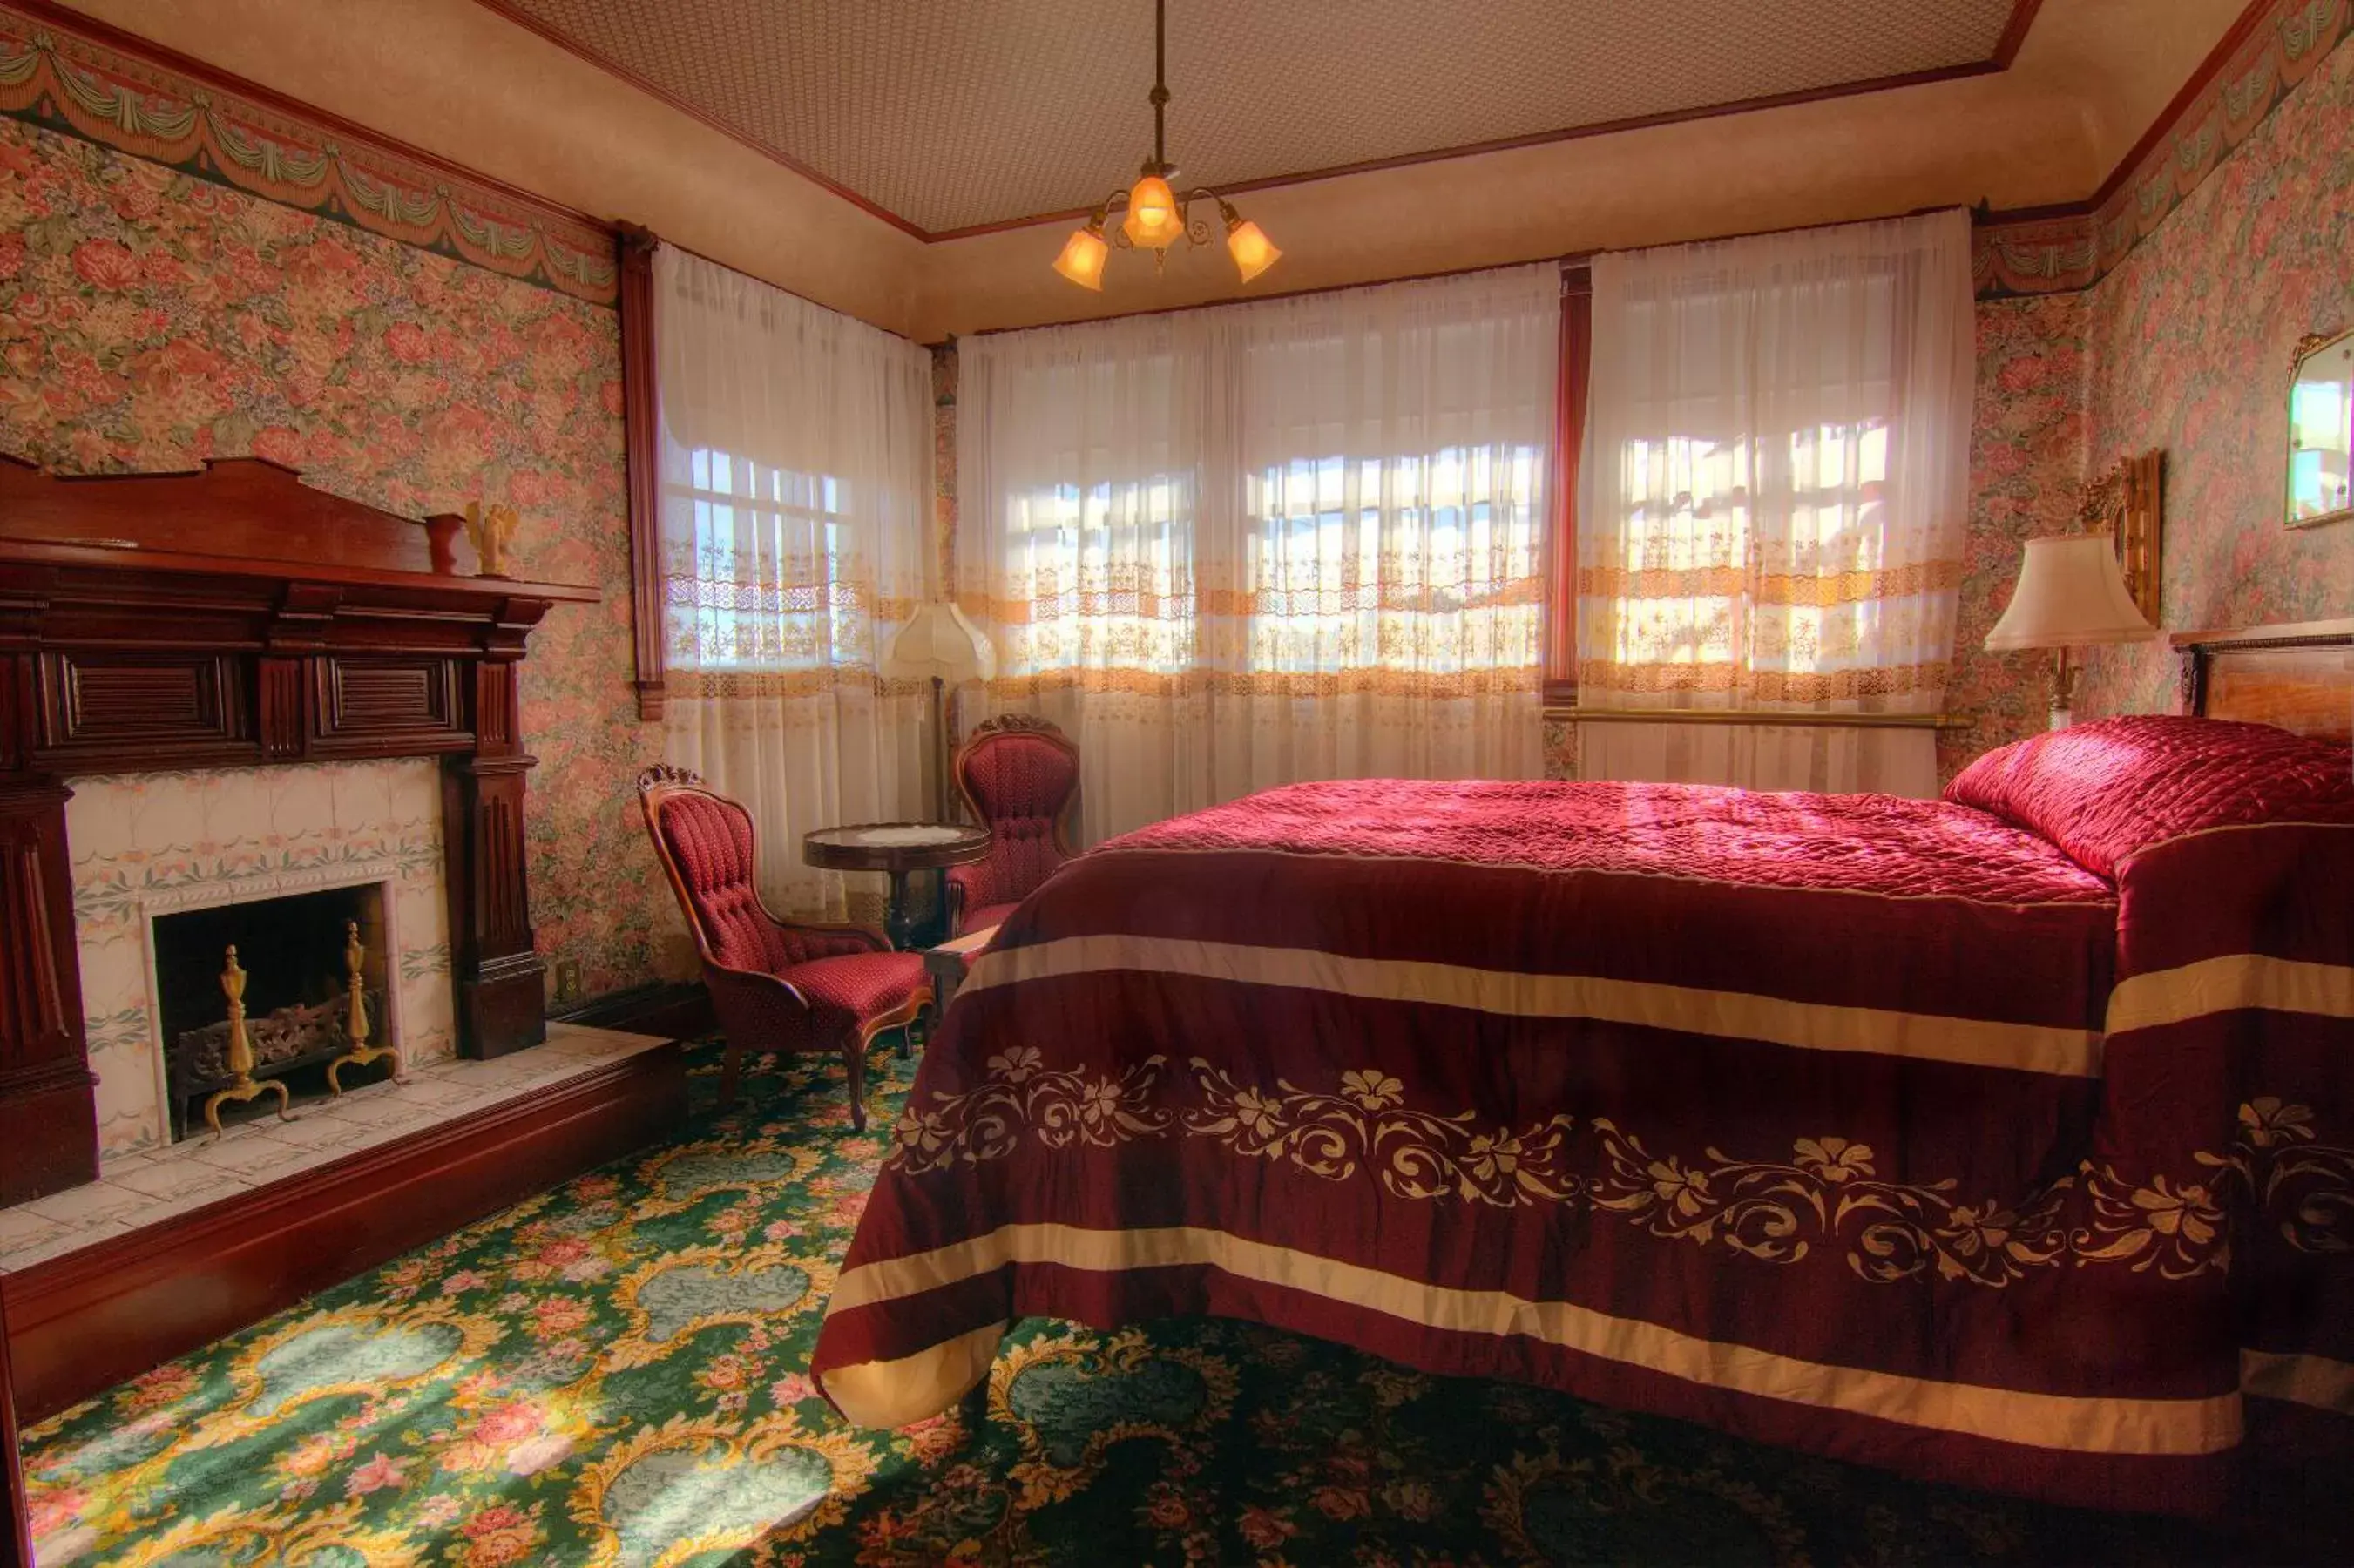 Bedroom, Bed in Gingerbread Mansion